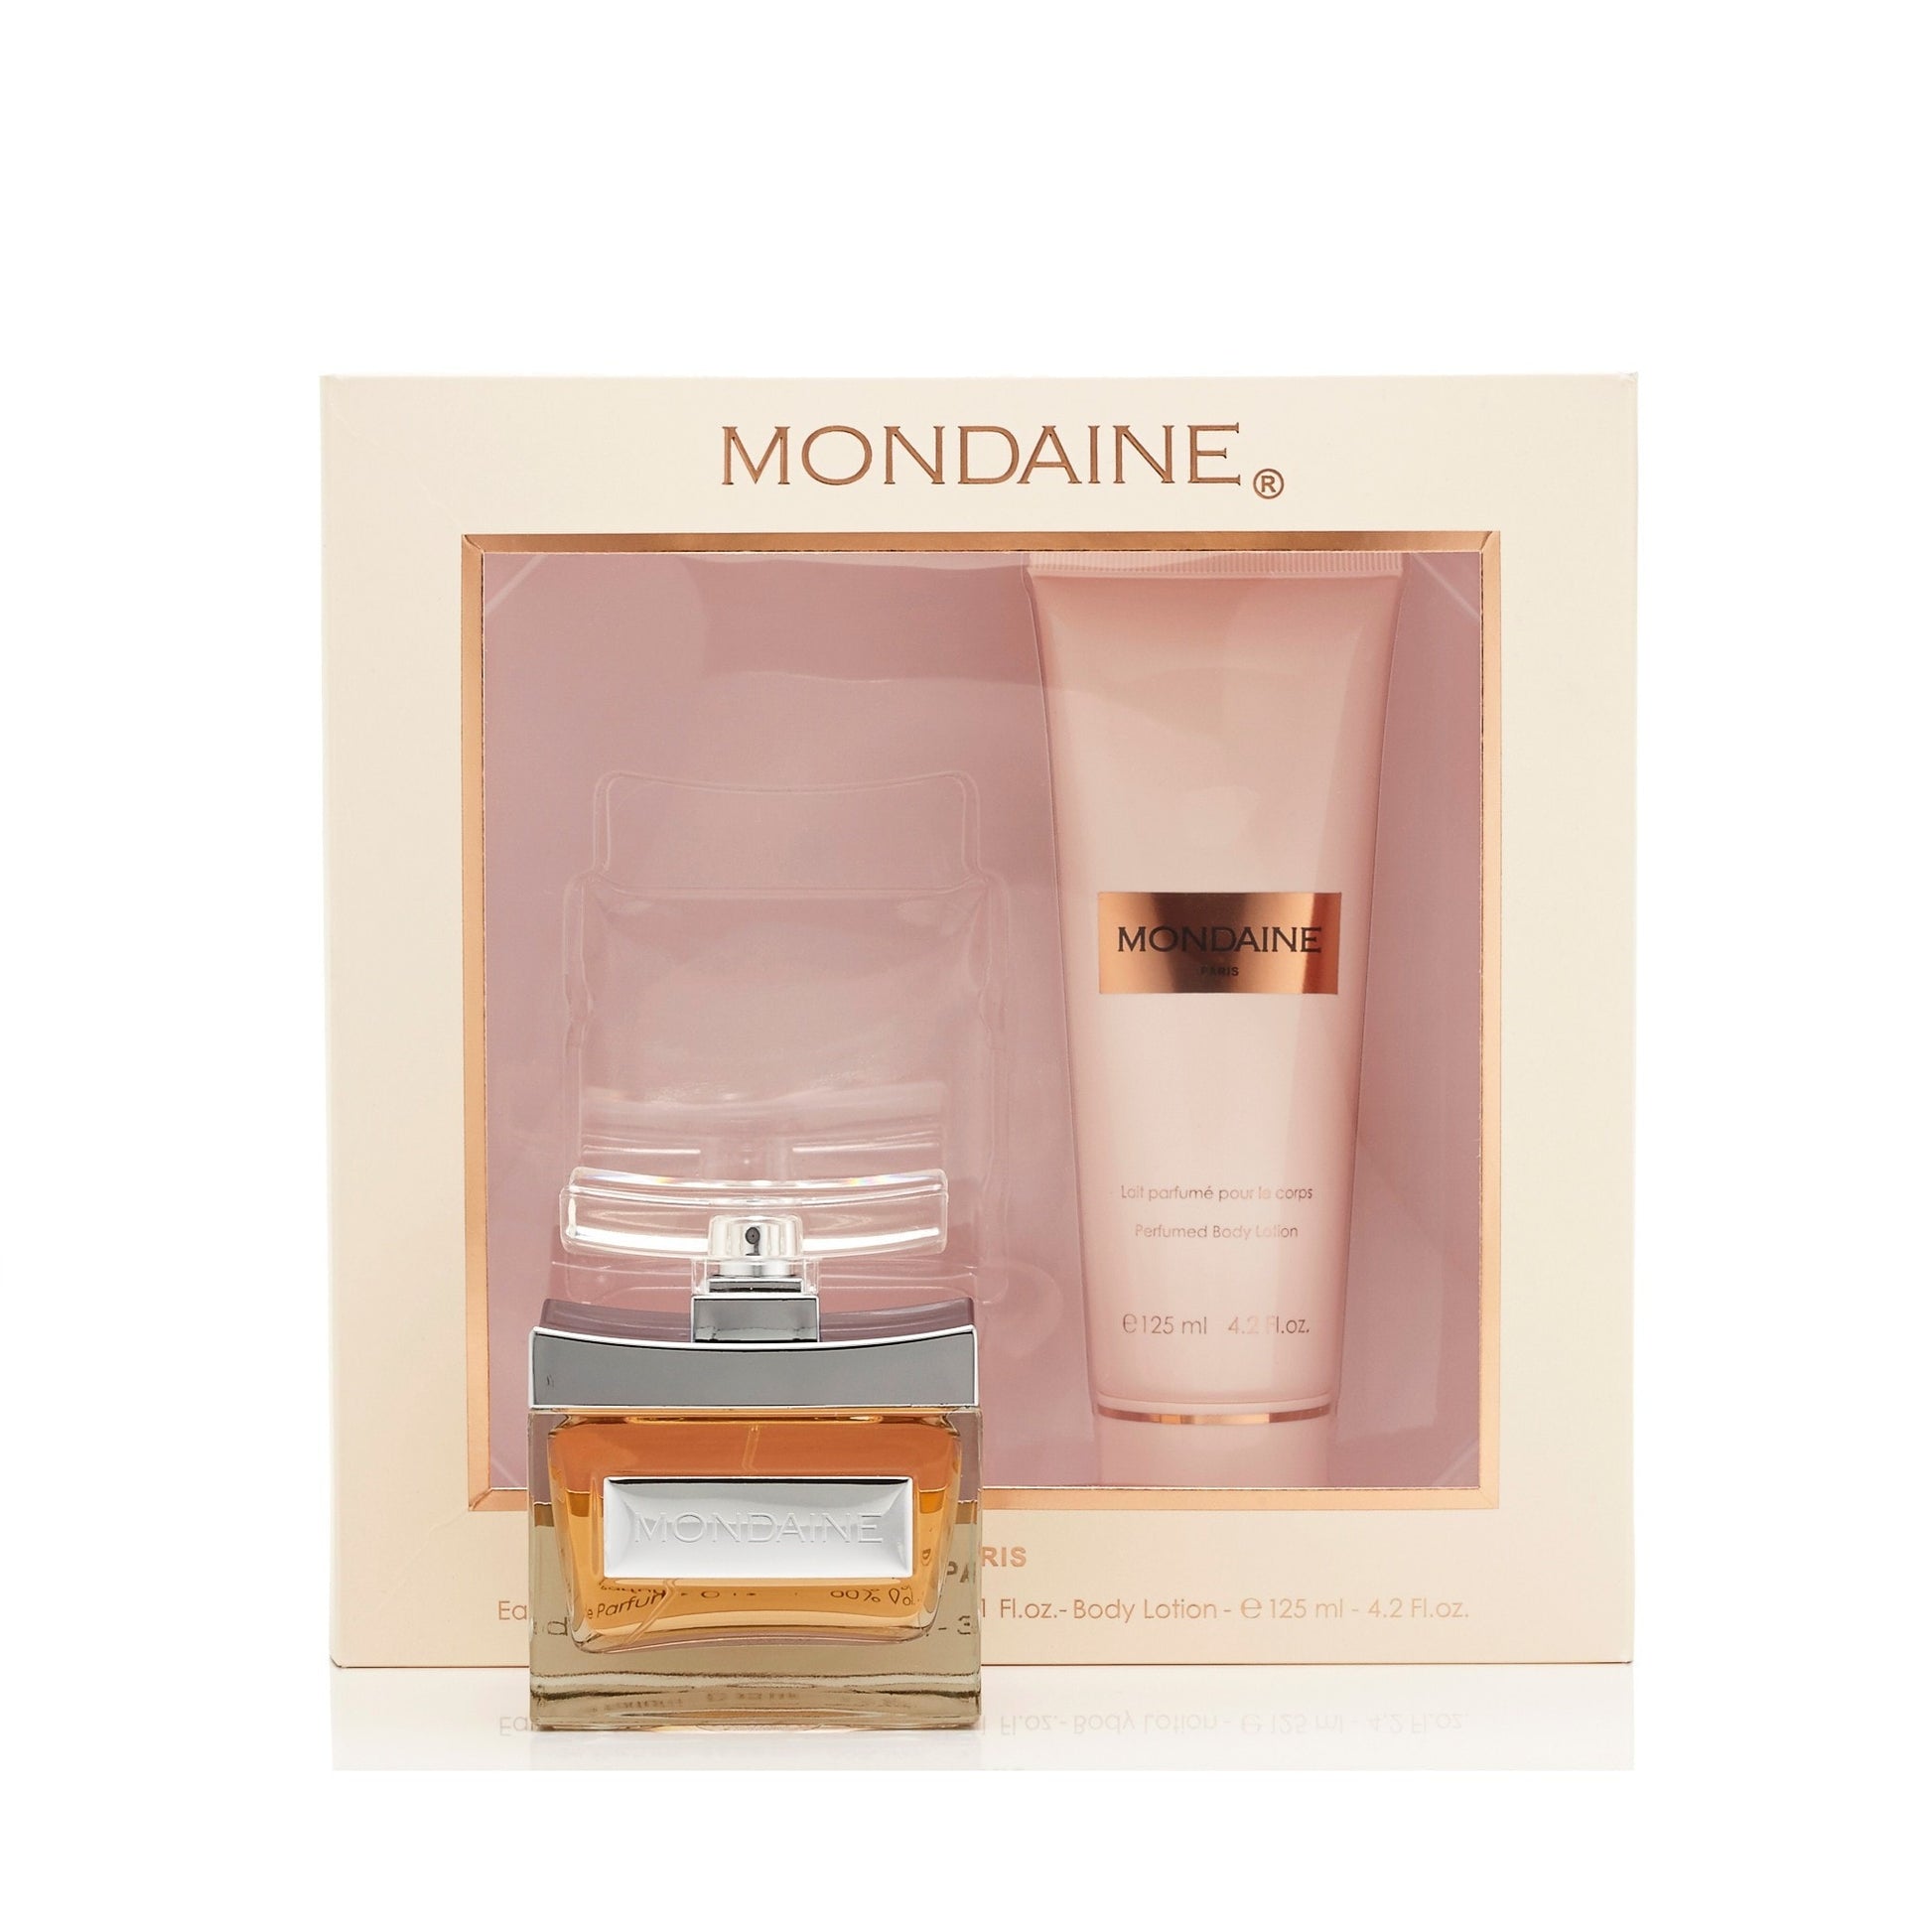 Mondaine Gift Set for Women 3.1 oz. Click to open in modal